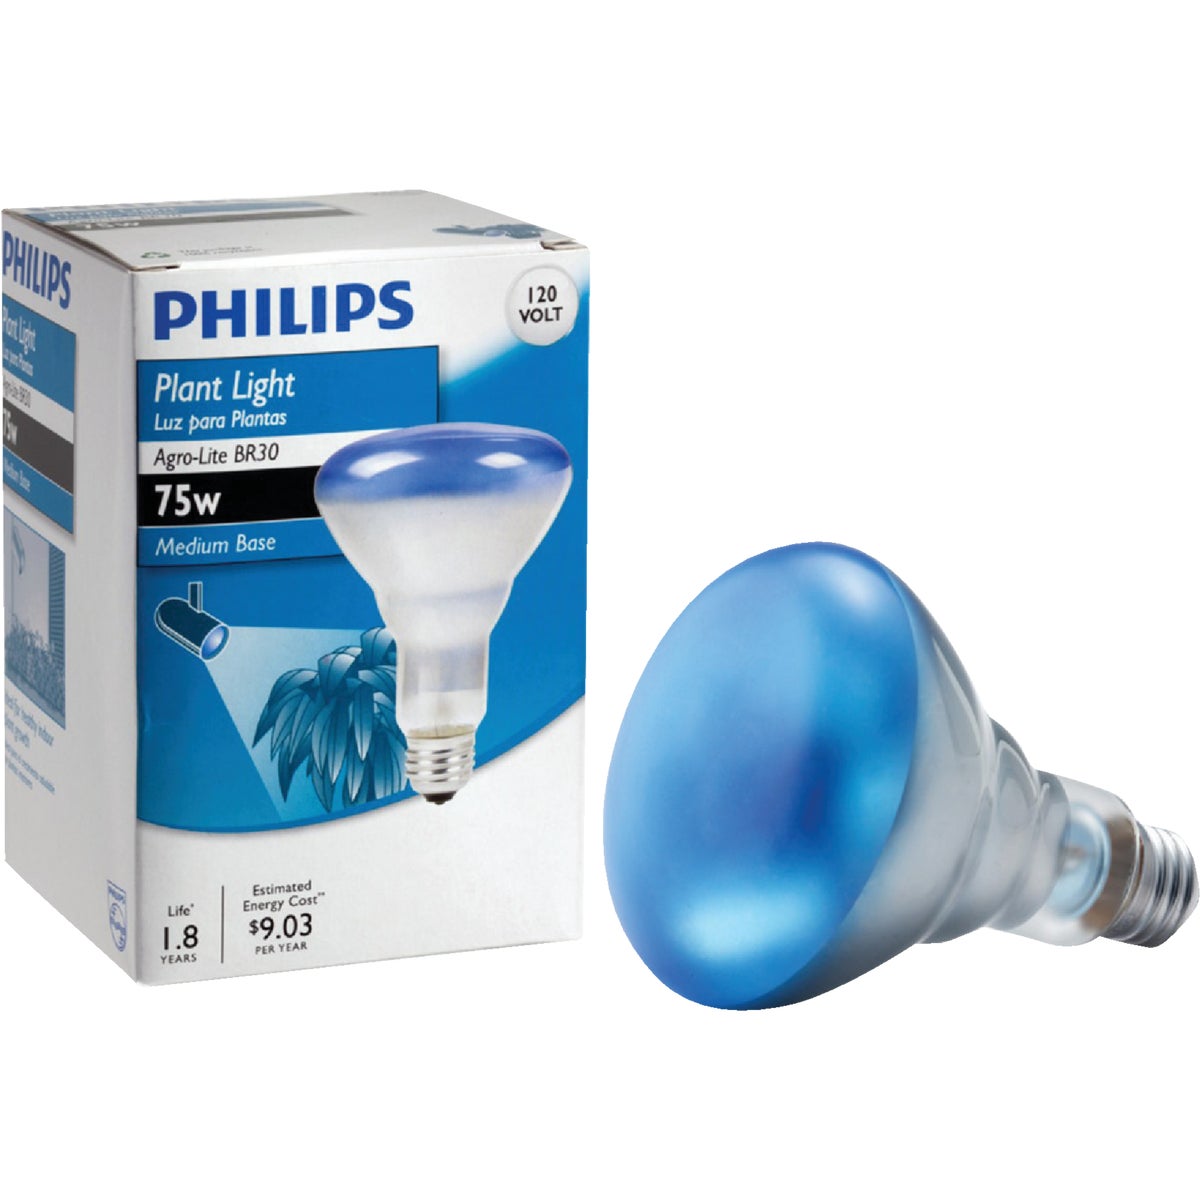 Philips Agro-Lite 75W Blue Plant Light Medium Base BR30 Incandescent Floodlight Light Bulb